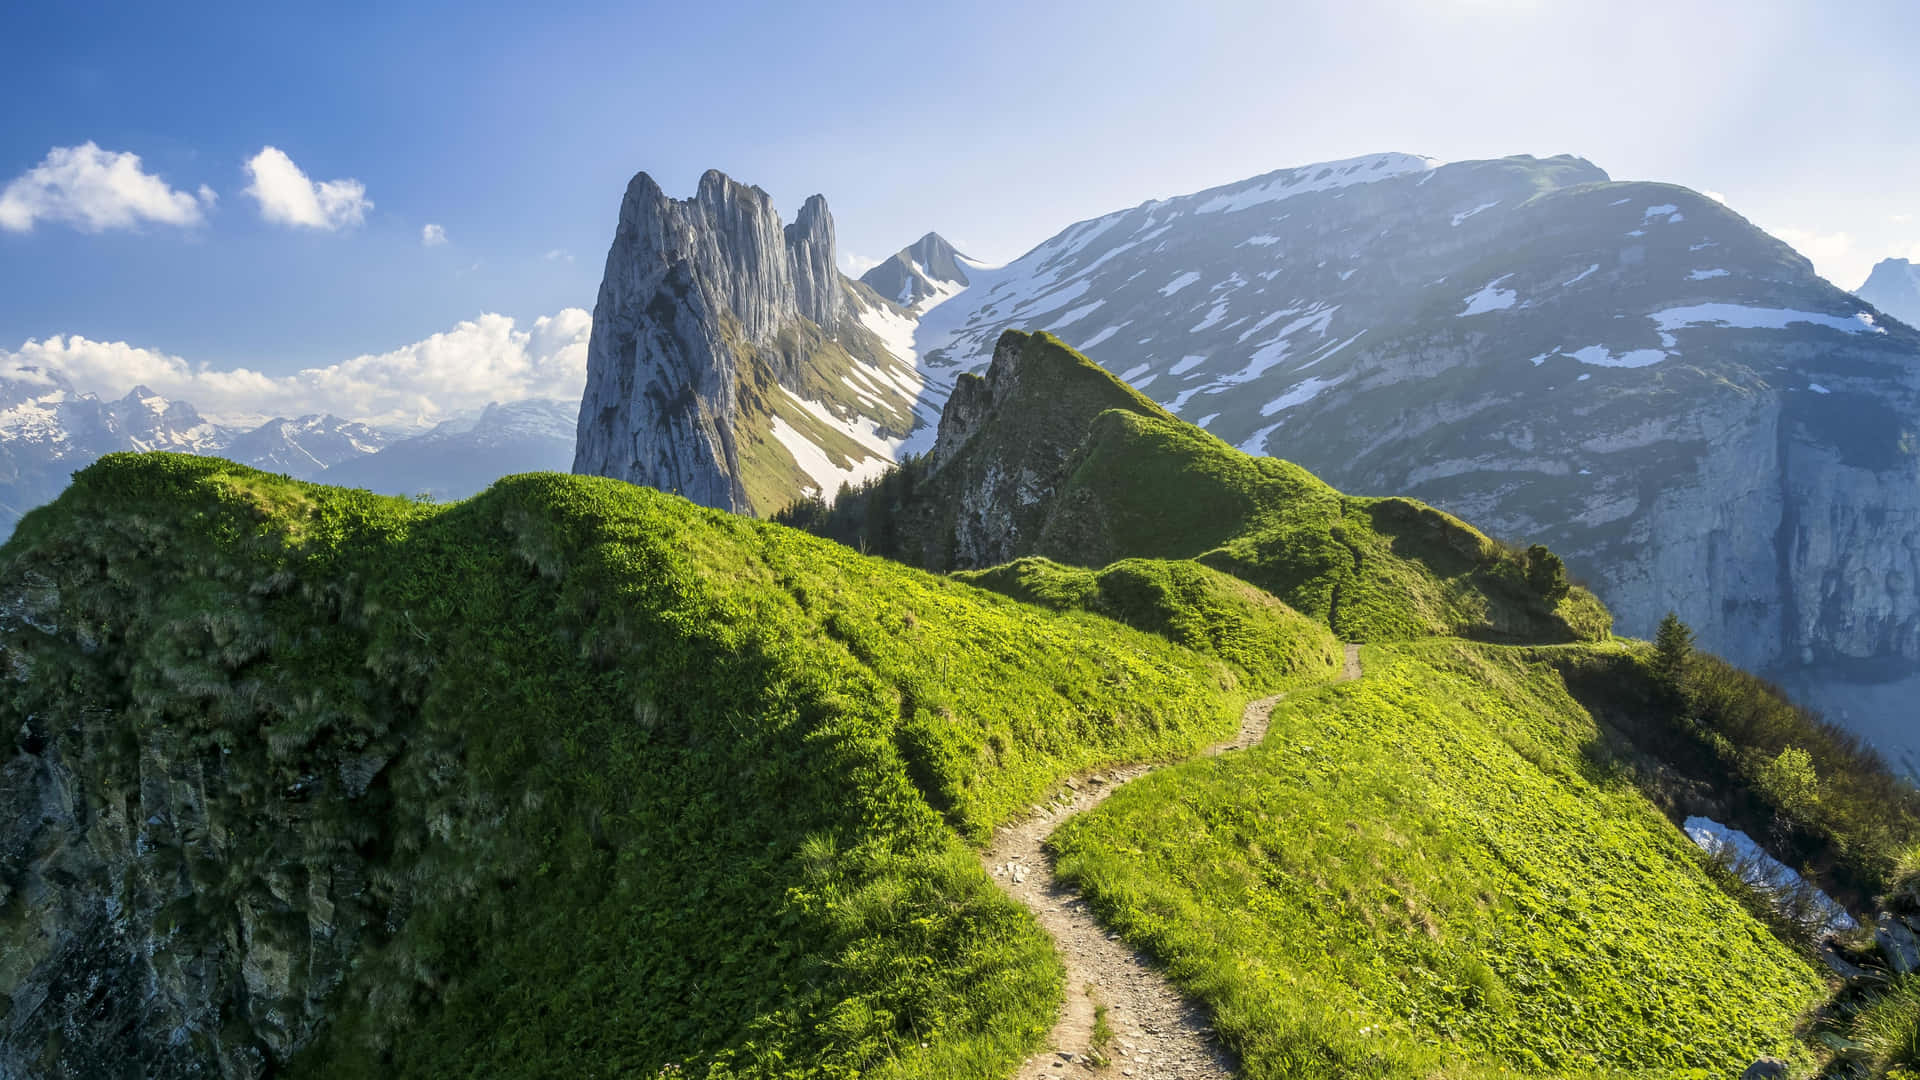 A view of Switzerland's majestic mountain landscape